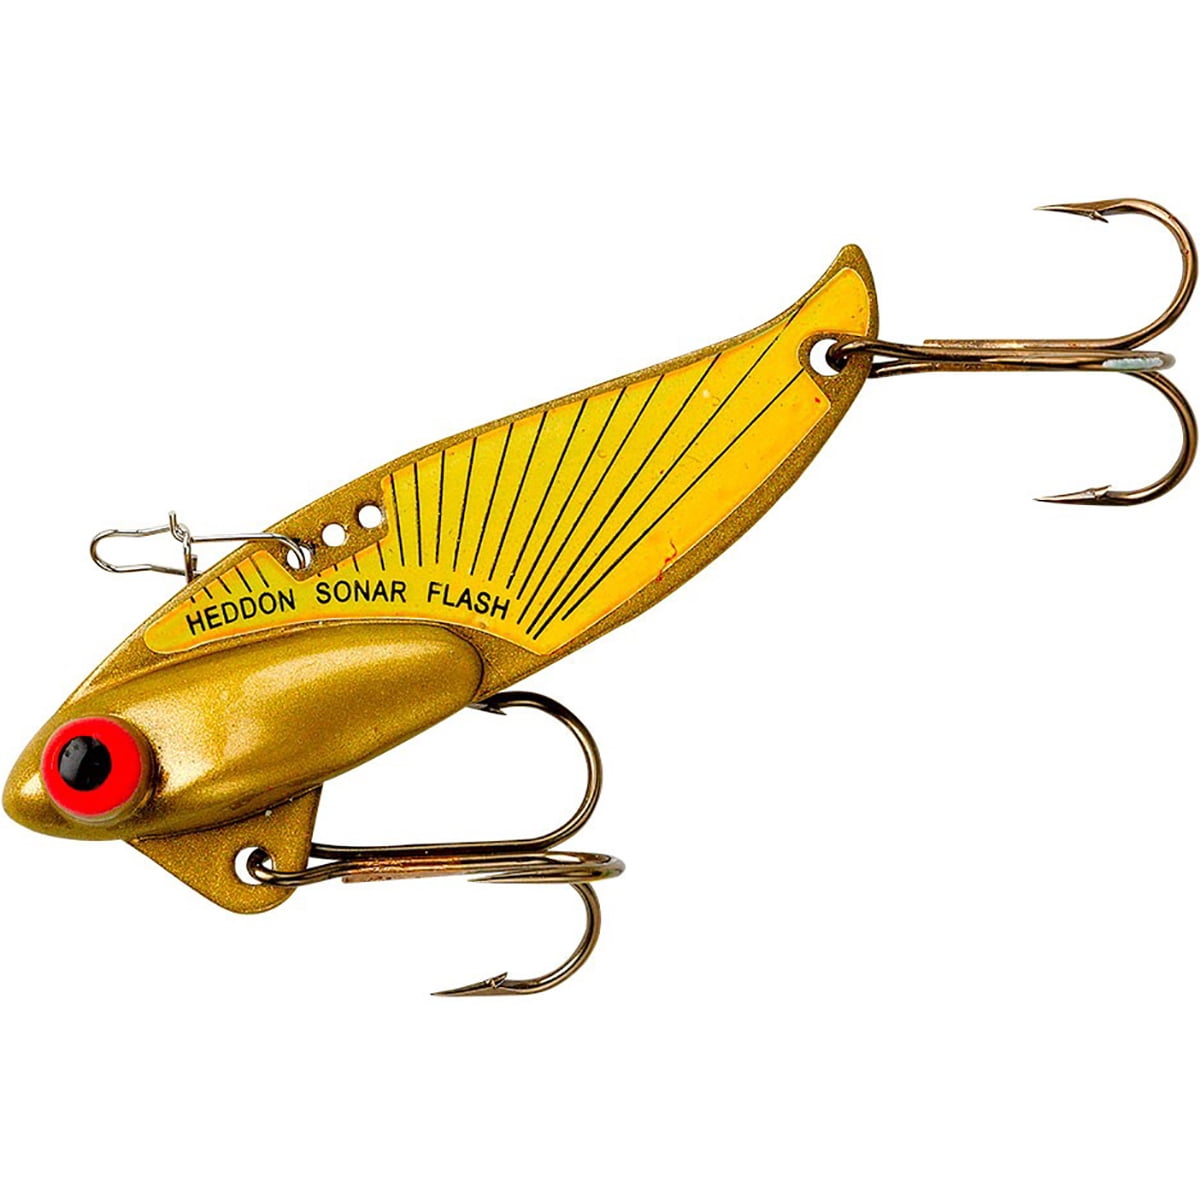 Heddon Sonar Flash 1/2 oz. Fishing Lure - Gold